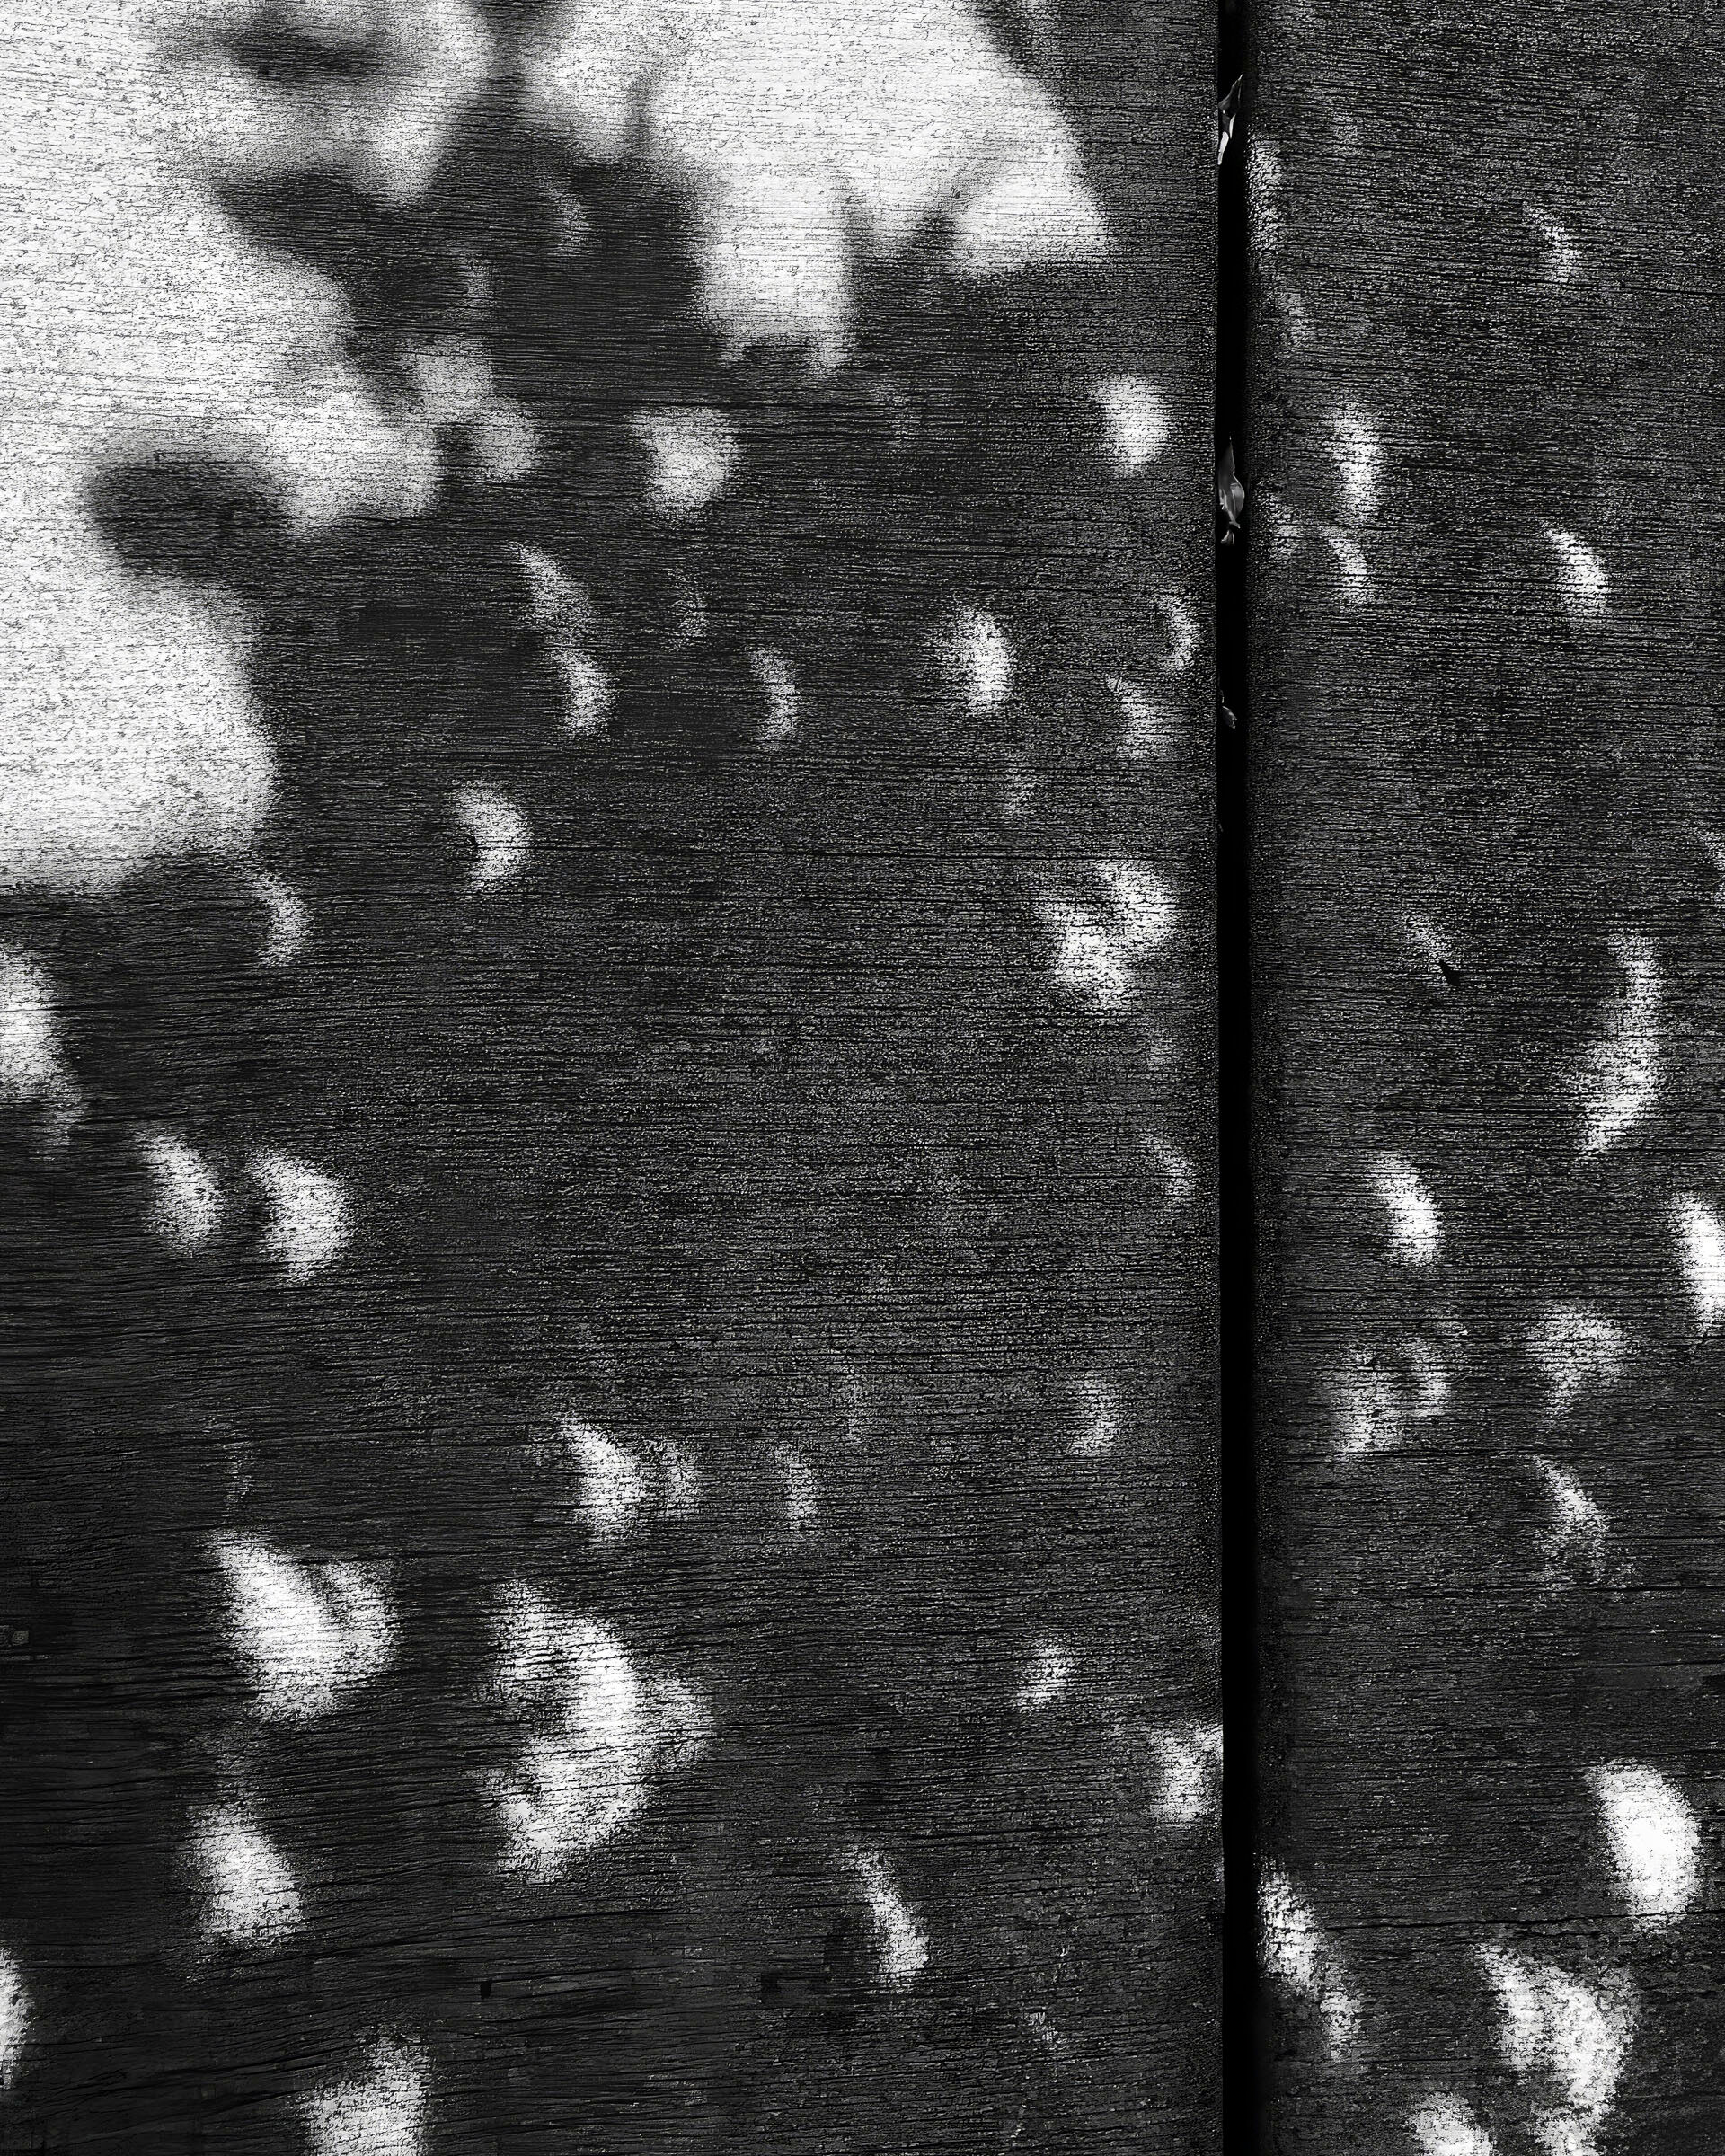 Solar eclipse crescent moon shadows through tree leaves